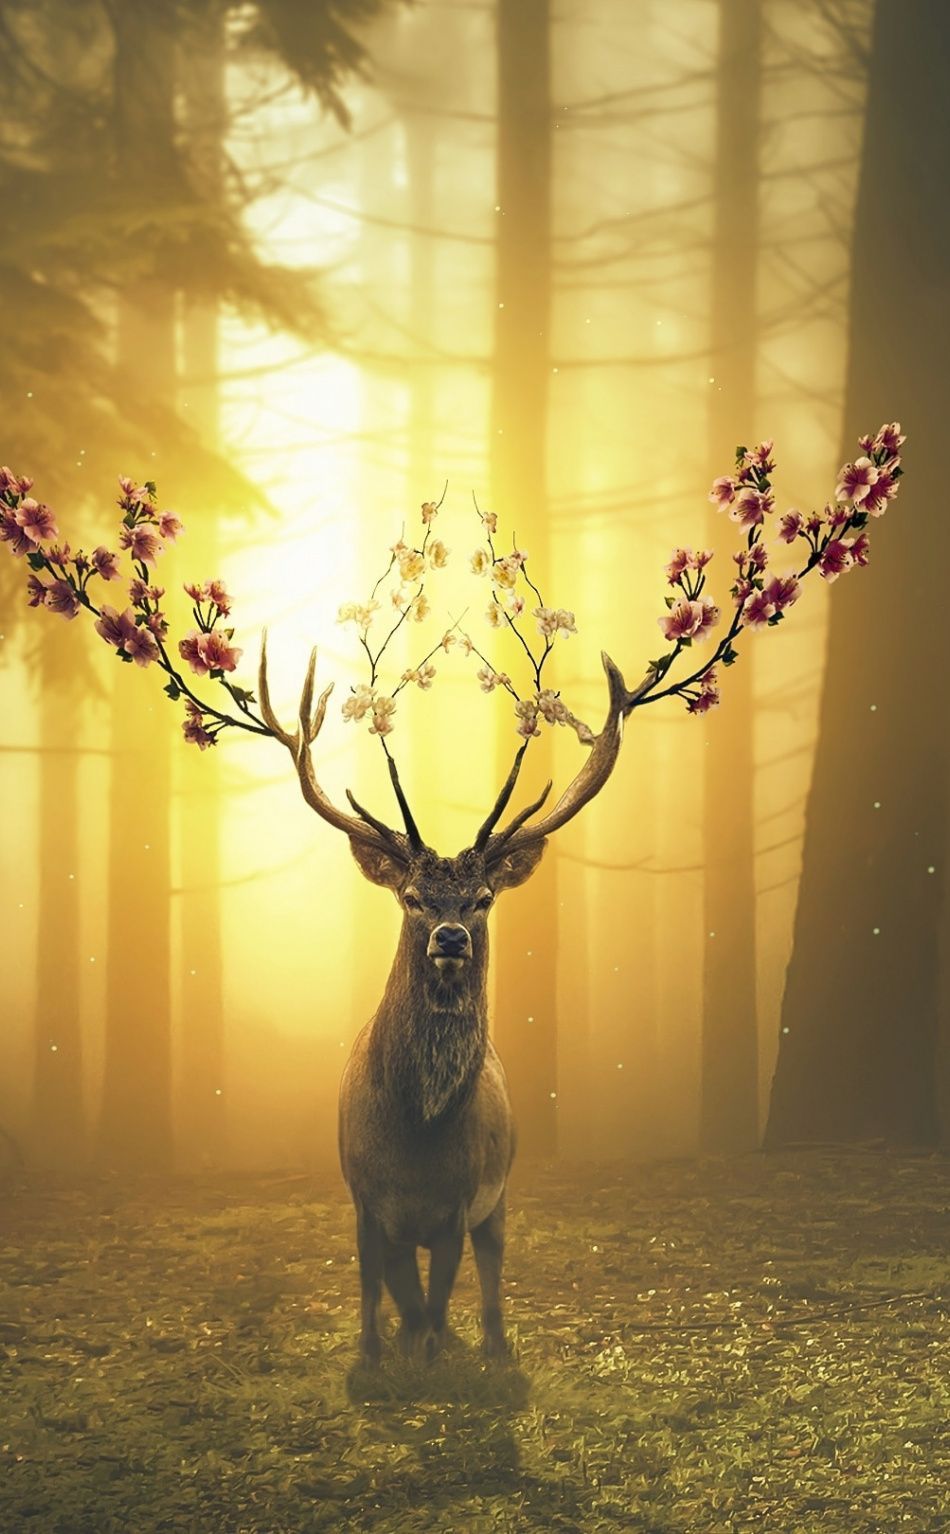  Hirsch Hintergrundbild 950x1534. Download 950x1534 wallpaper Deer, forest, surreal, iPhone, 950x1534 HD image, background, 18648. Deer wallpaper, Fantasy forest, Deer art